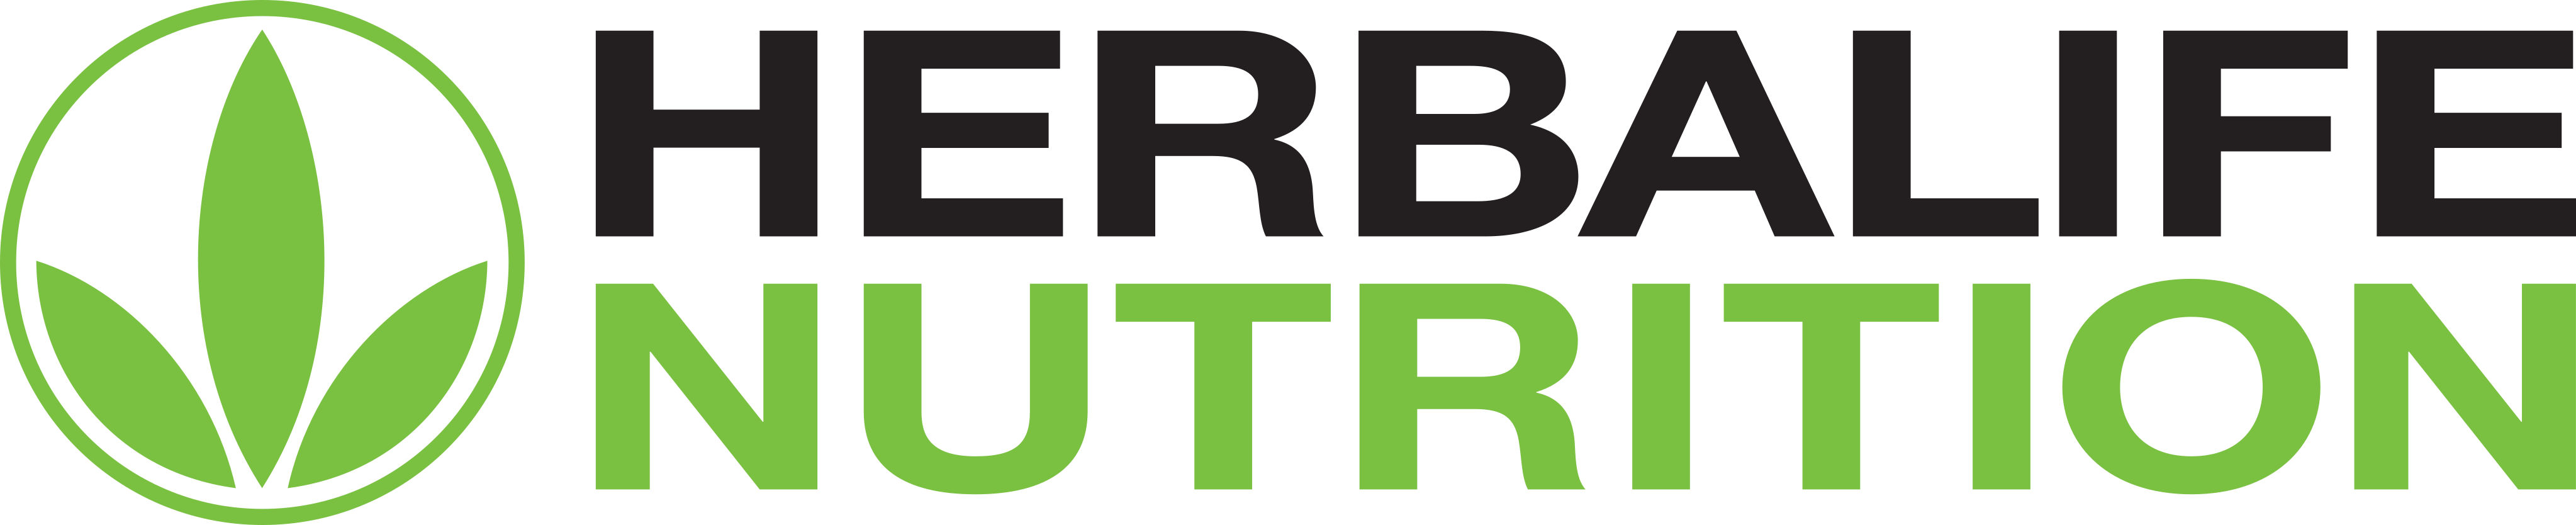 Herbalife Logo.